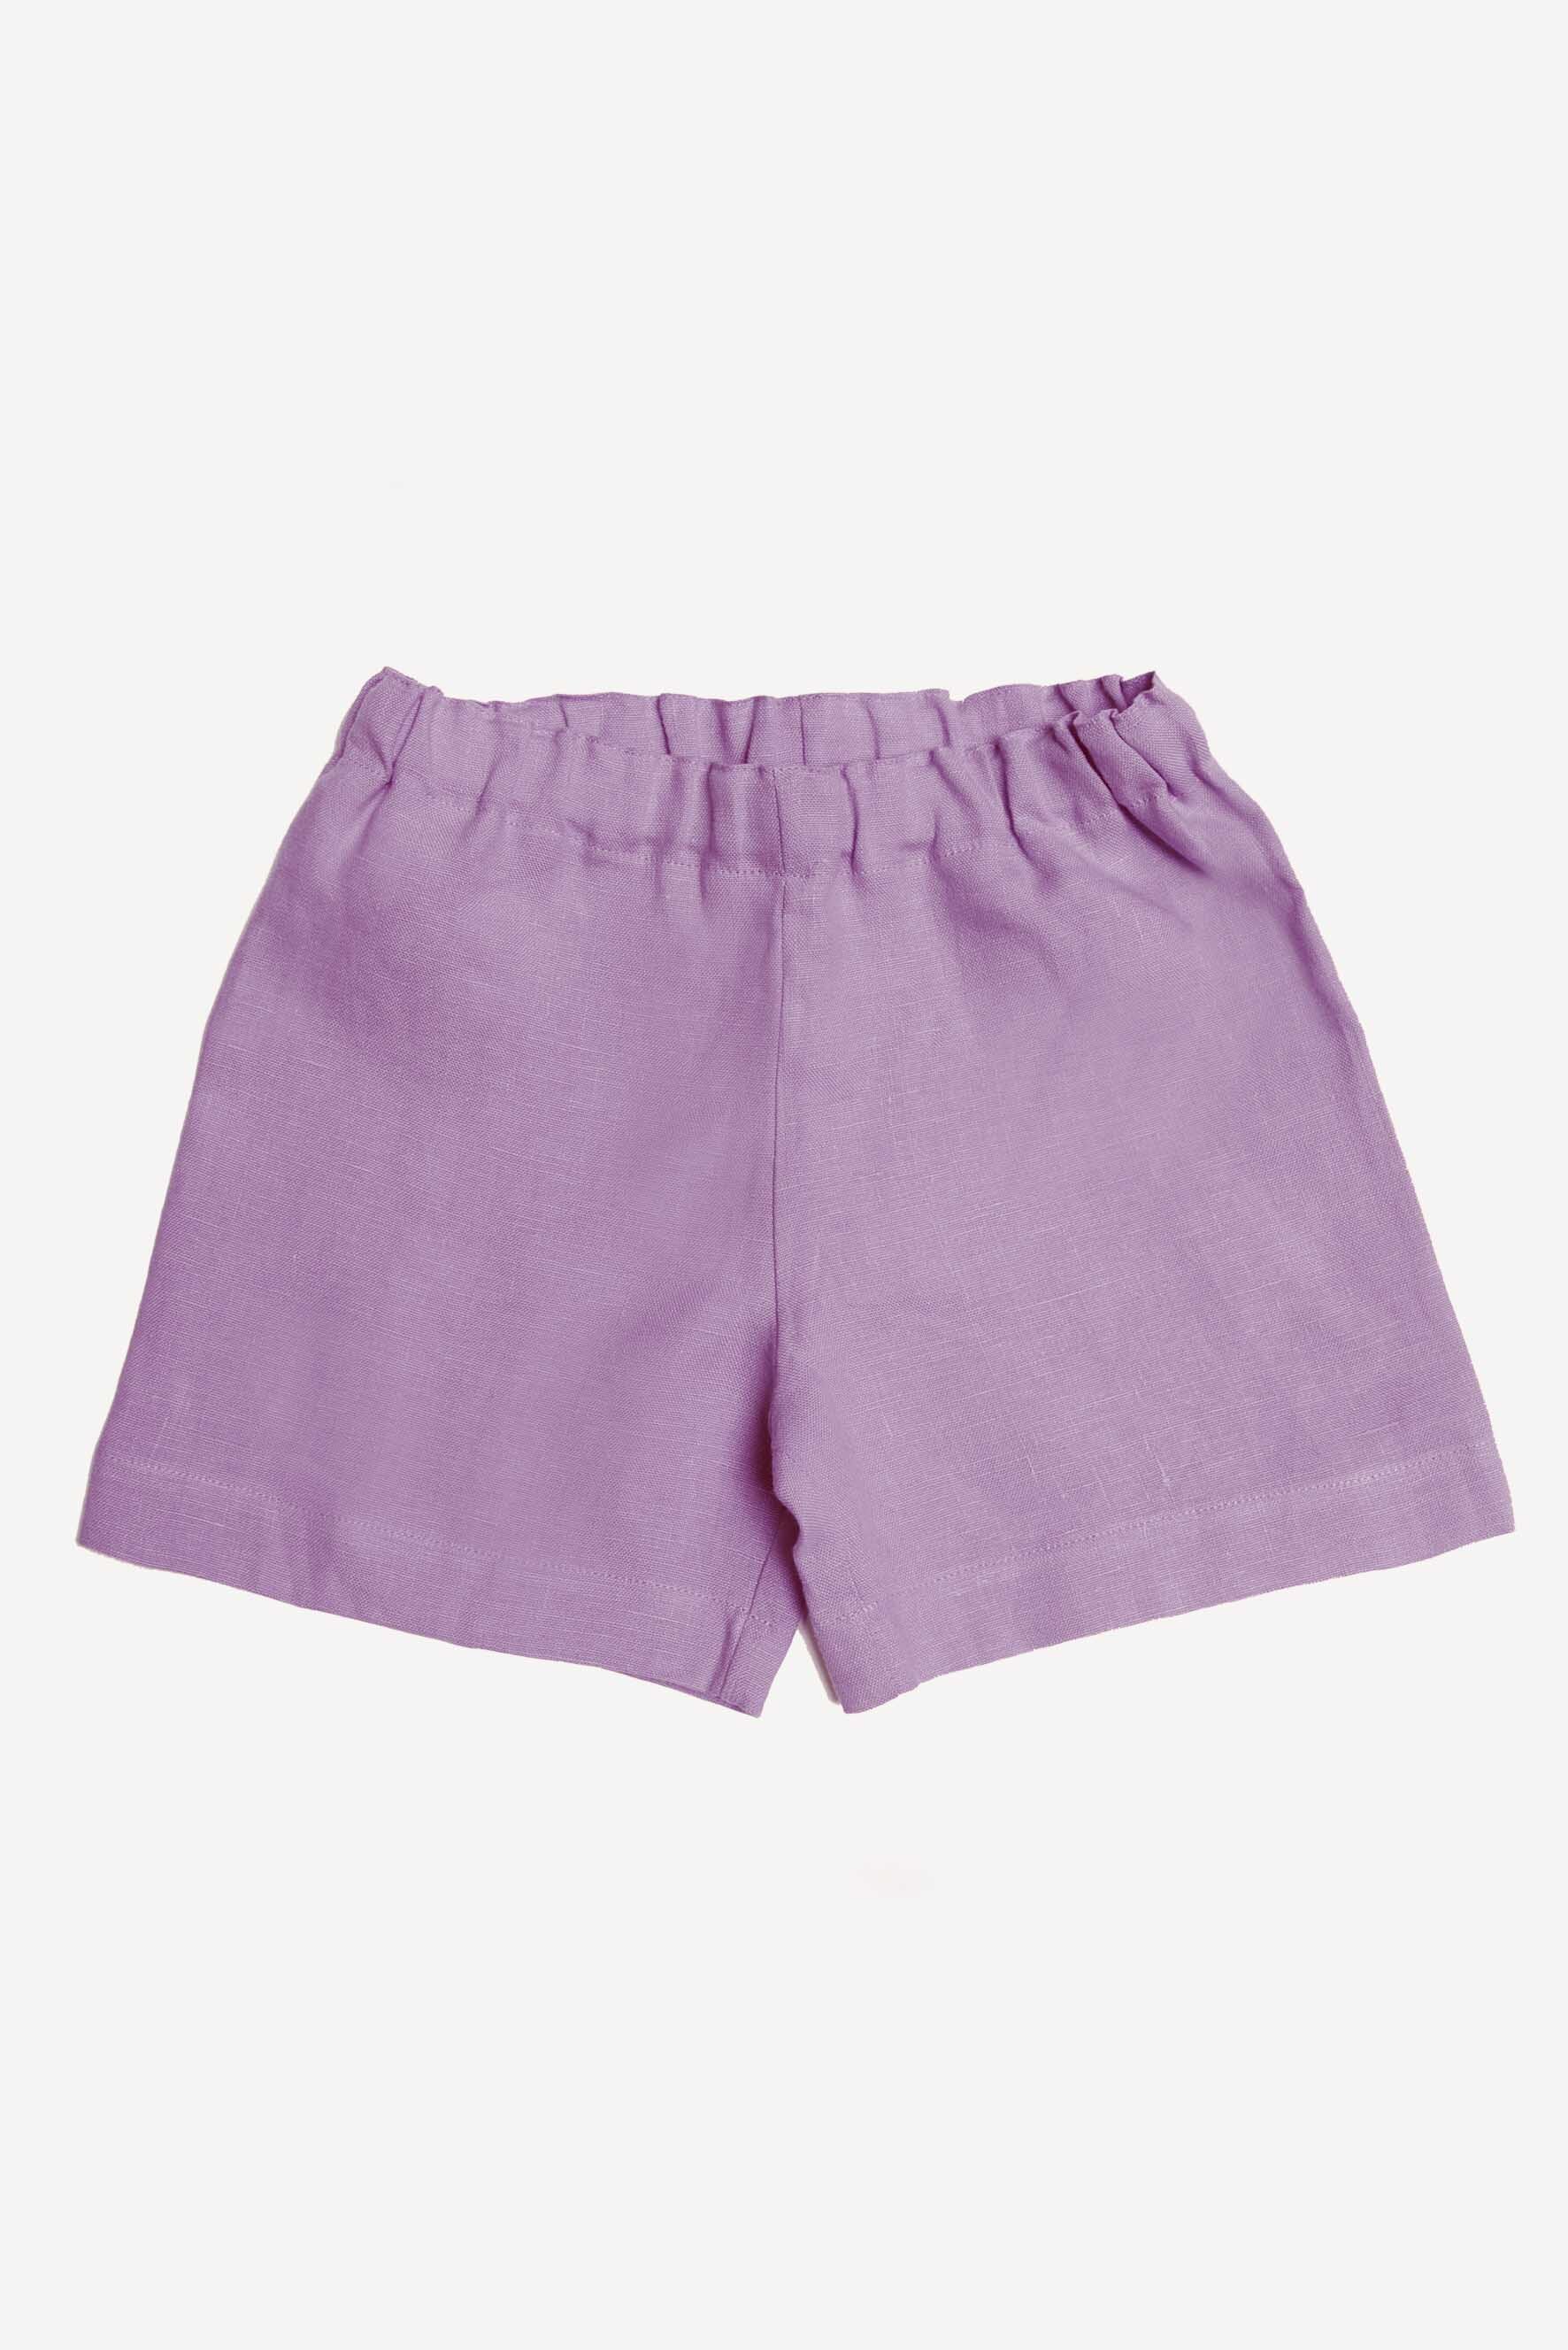 Pantaloncini bambina lino lilla